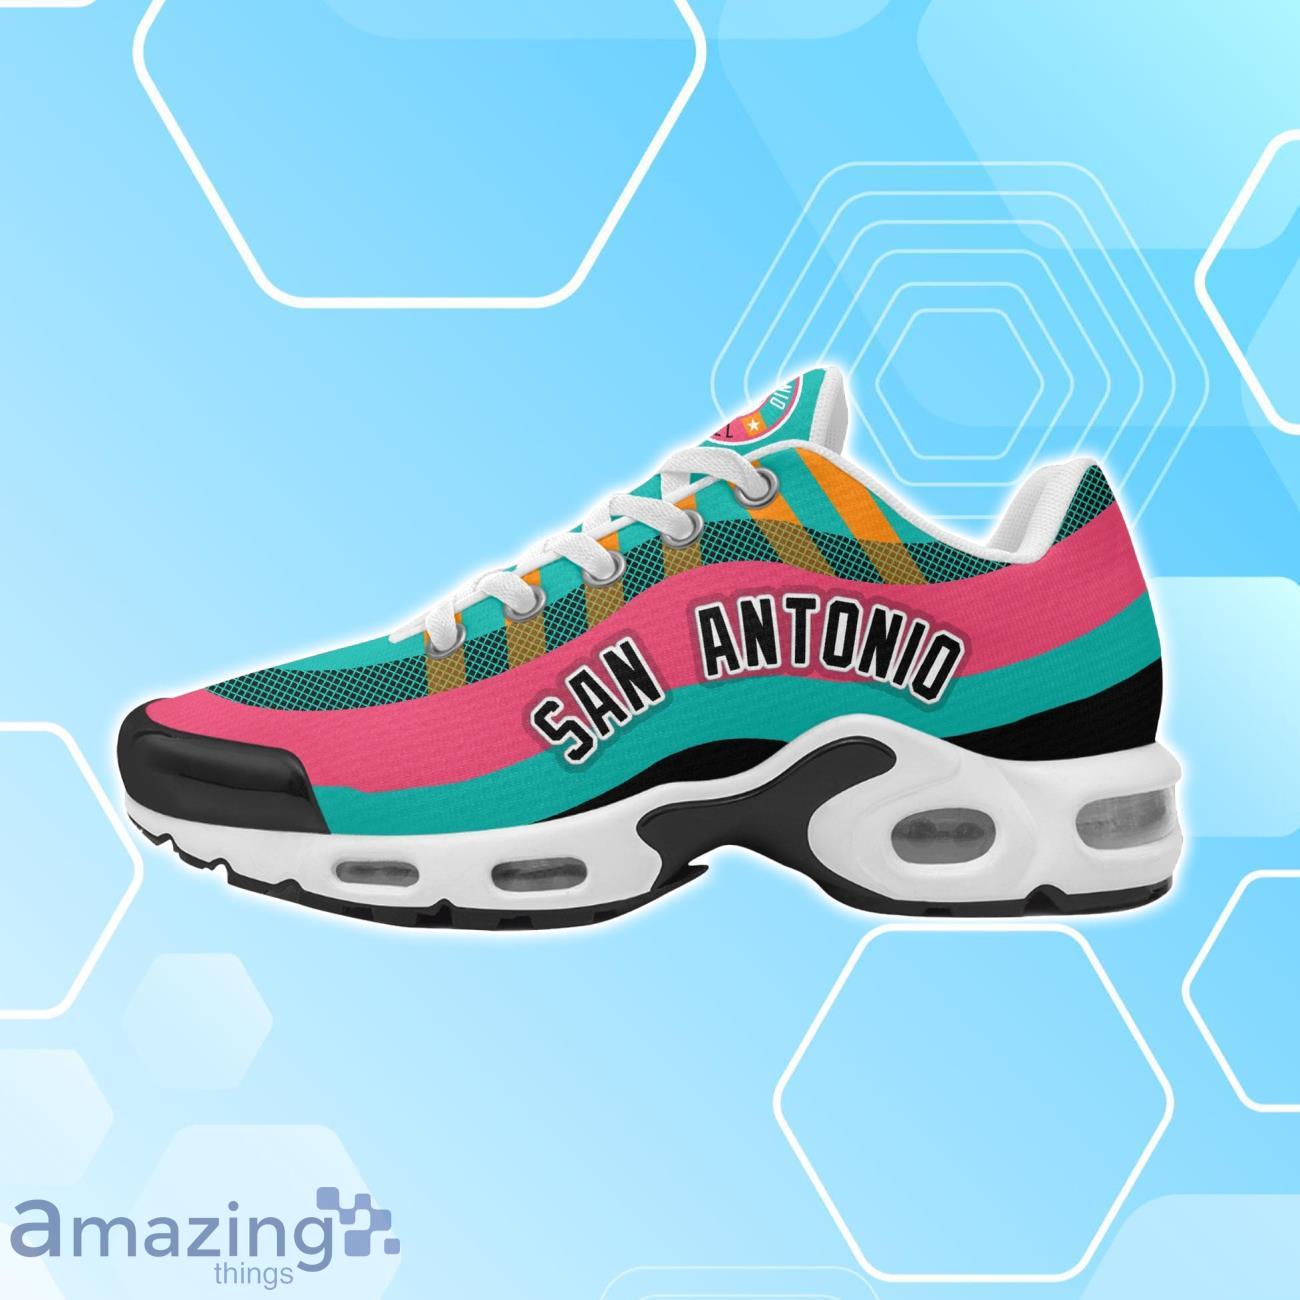 San Antonio Basketball Air Cushion Shoes For Men Women Product Photo 1